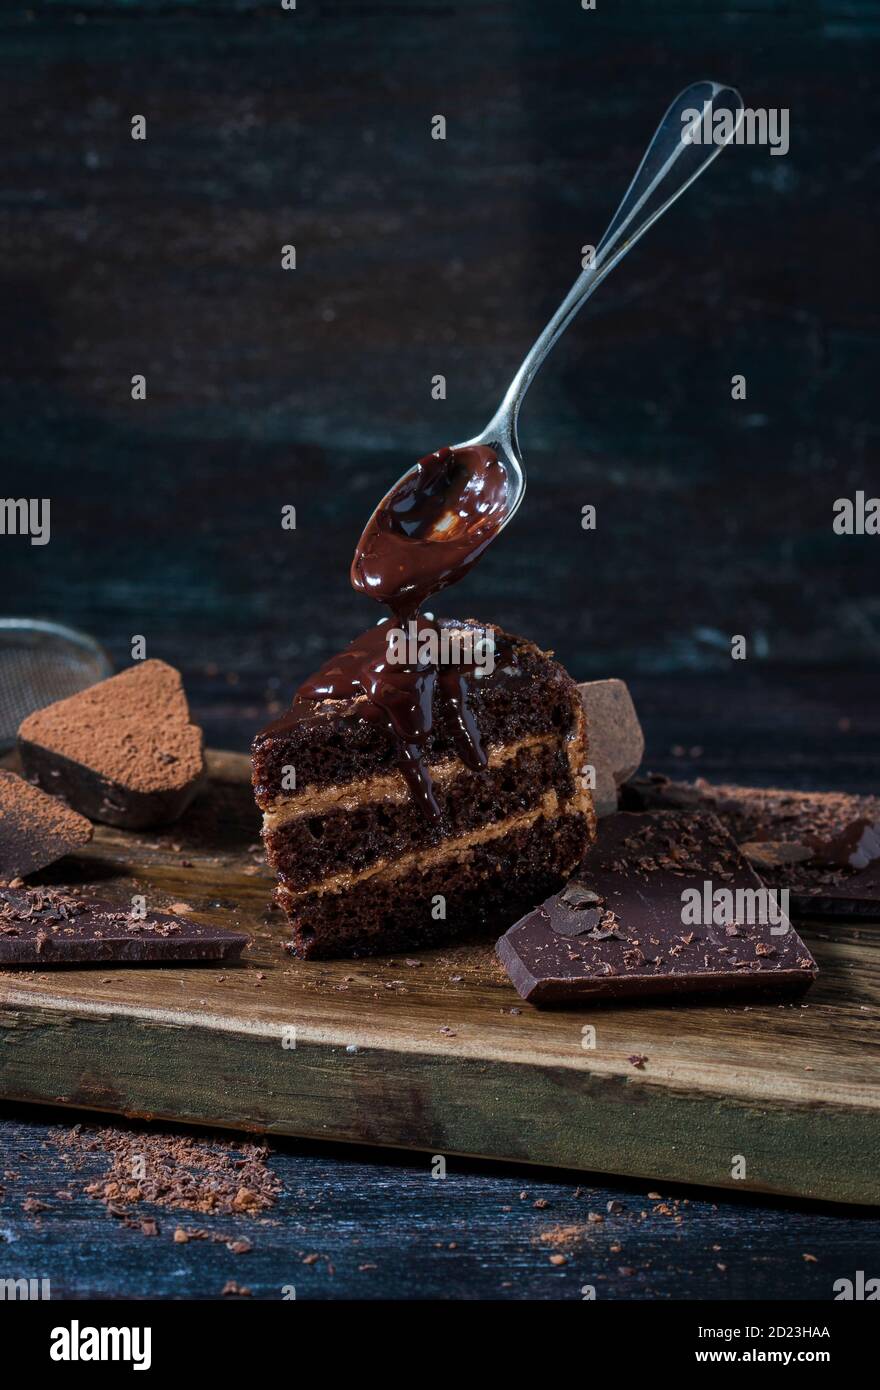 Chocolate brownie, dark chocolate over wooden background Stock Photo